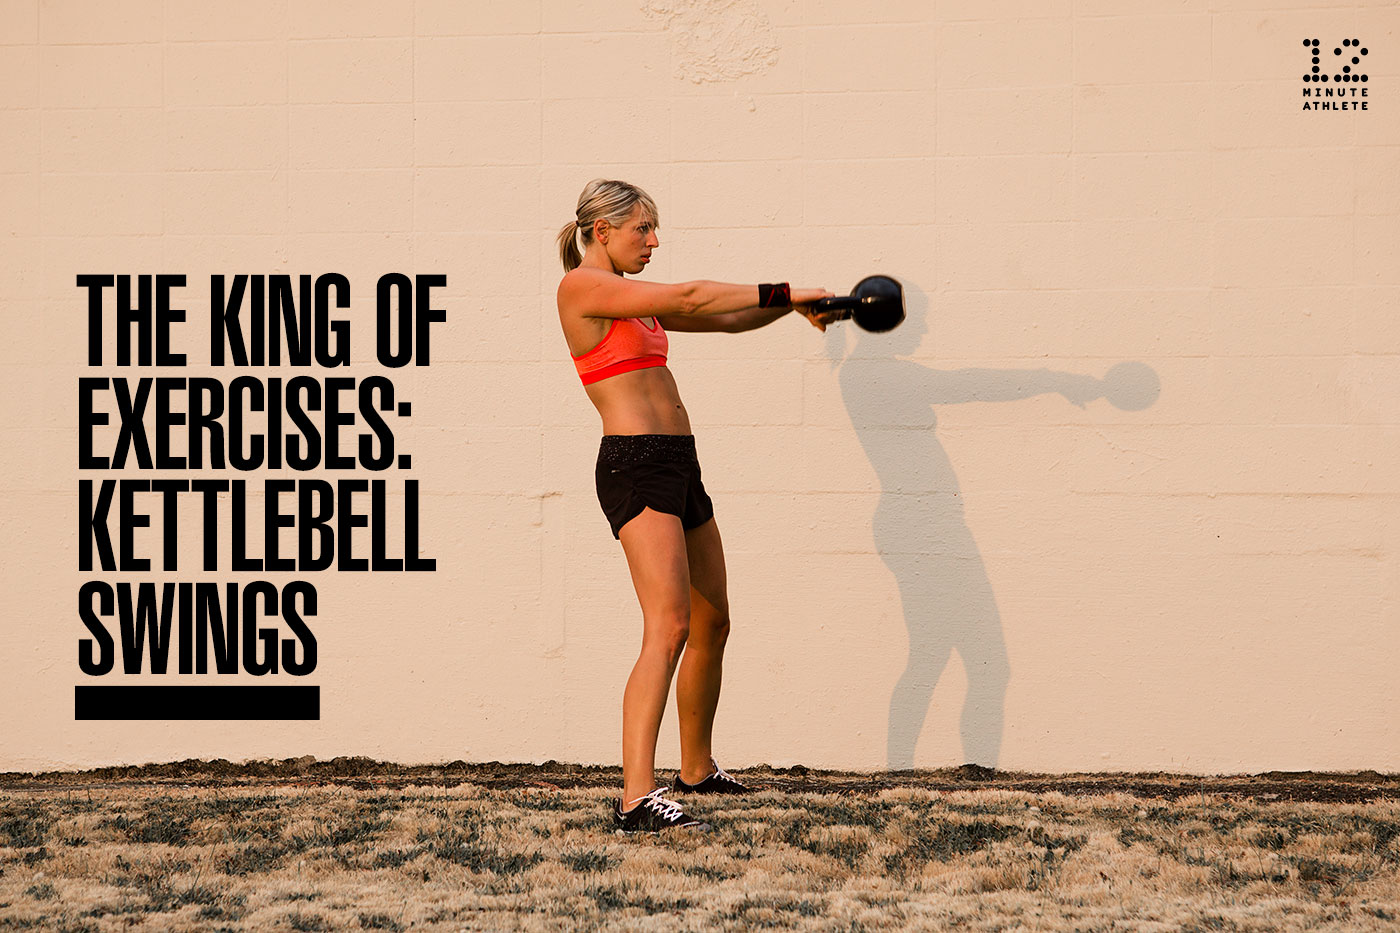 The King of Exercises: Kettlebell Swings 12 Minute Athlete